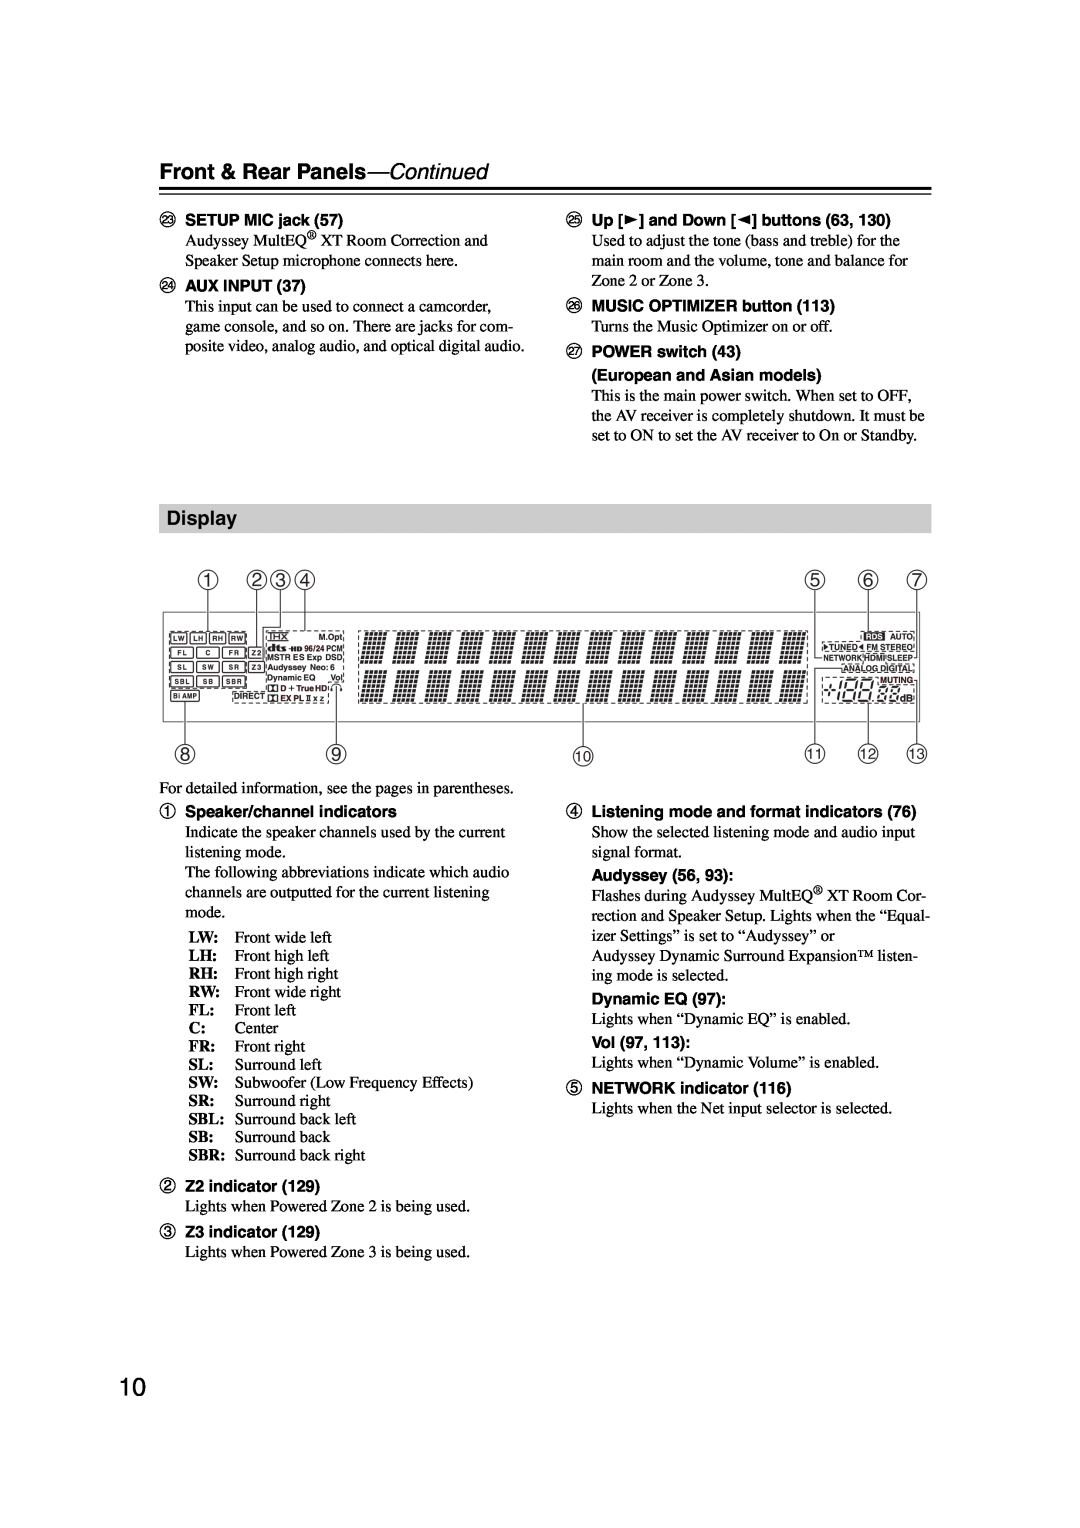 Onkyo TX-NR1007 instruction manual a bcd, e f g, jk l m, Display, Front & Rear Panels—Continued 